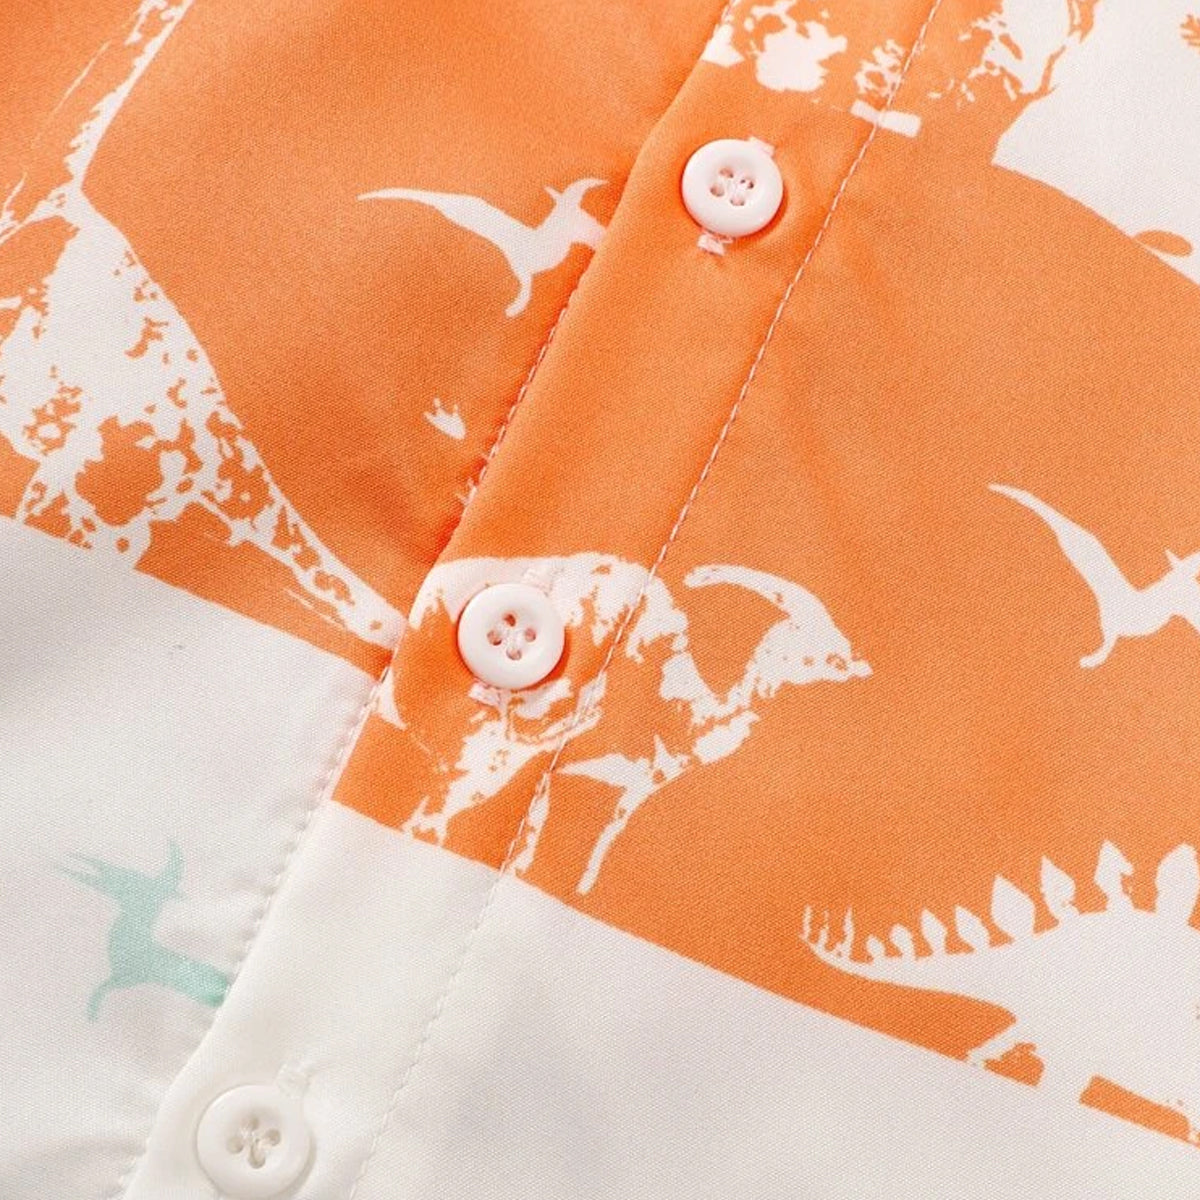 Venutaloza Dinosaur Animal Designer Print Button Front Shirt For Boys.